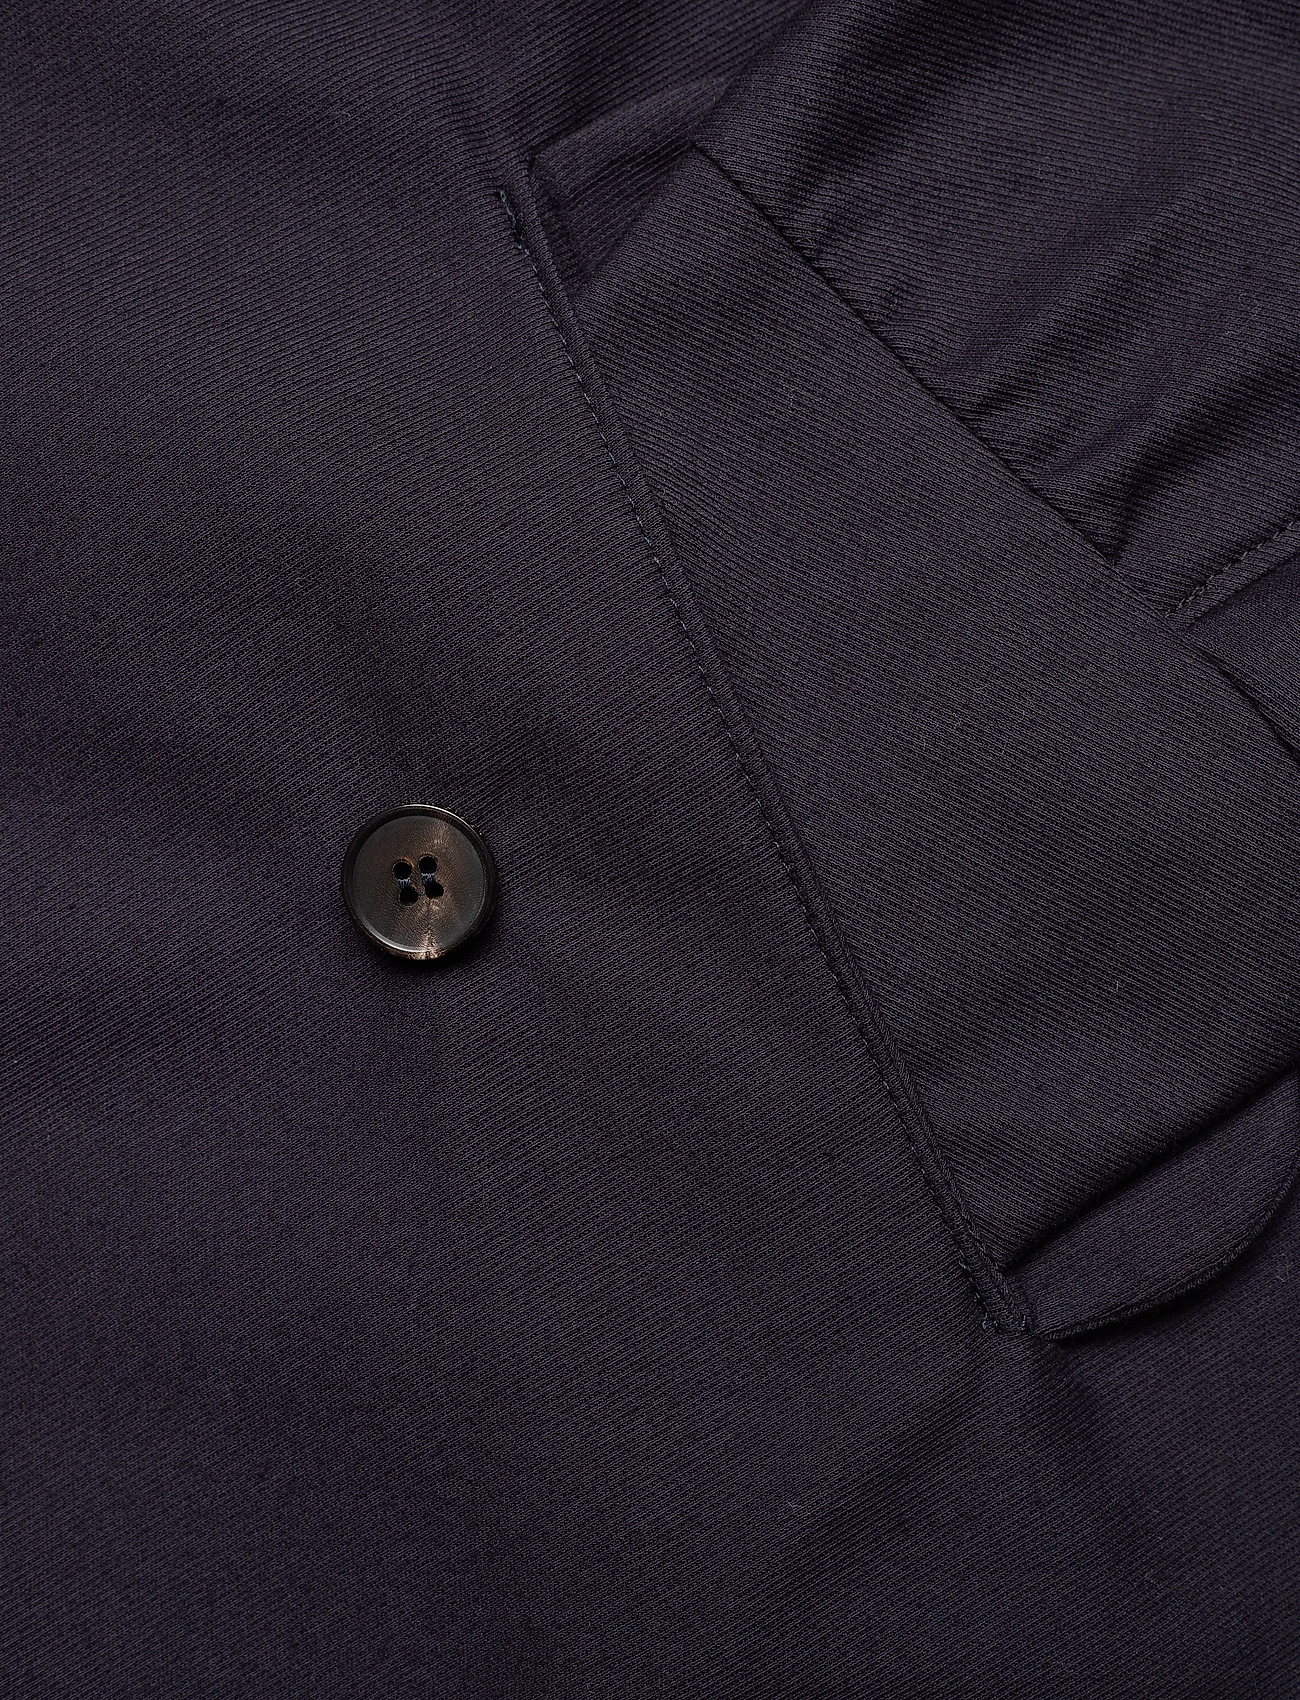 Harris Wharf London - C9319PTA Harrington jacket - vestes légères use default - dark blue - 3